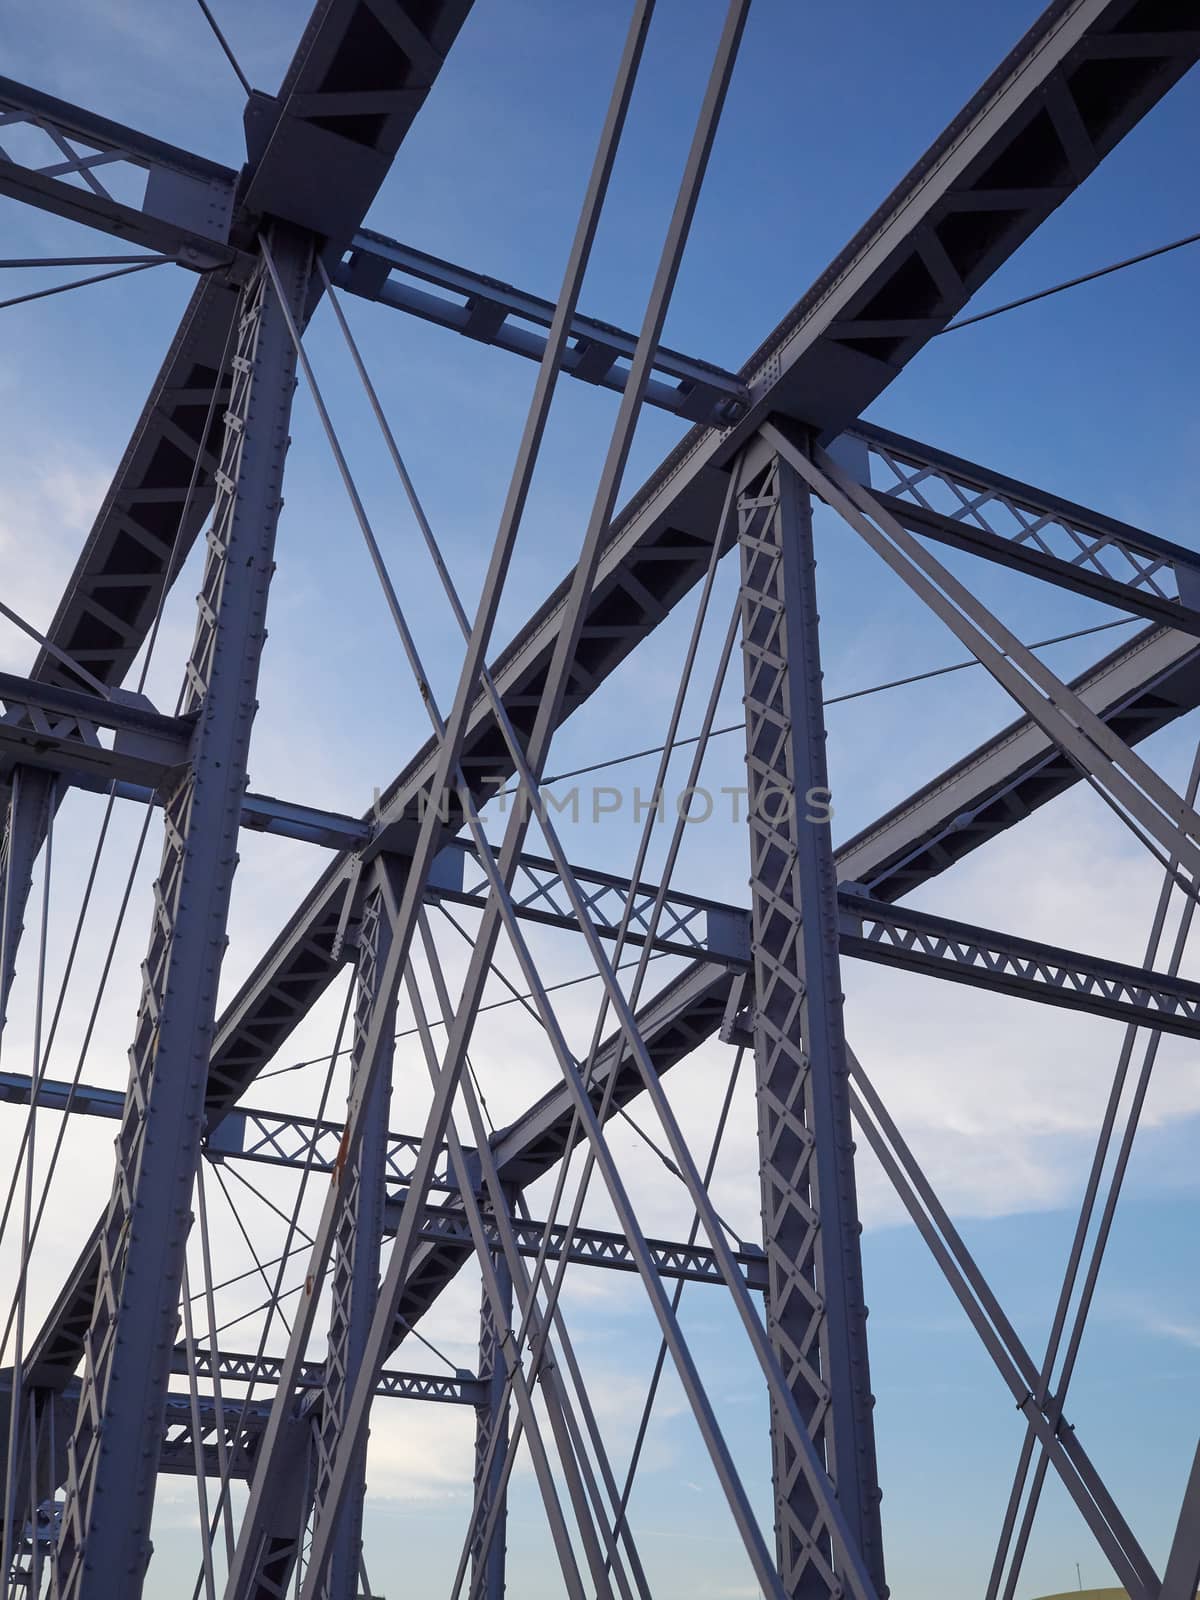 Detail shot of an historic gray painted Dutch riveted truss bridge against a blue sky.